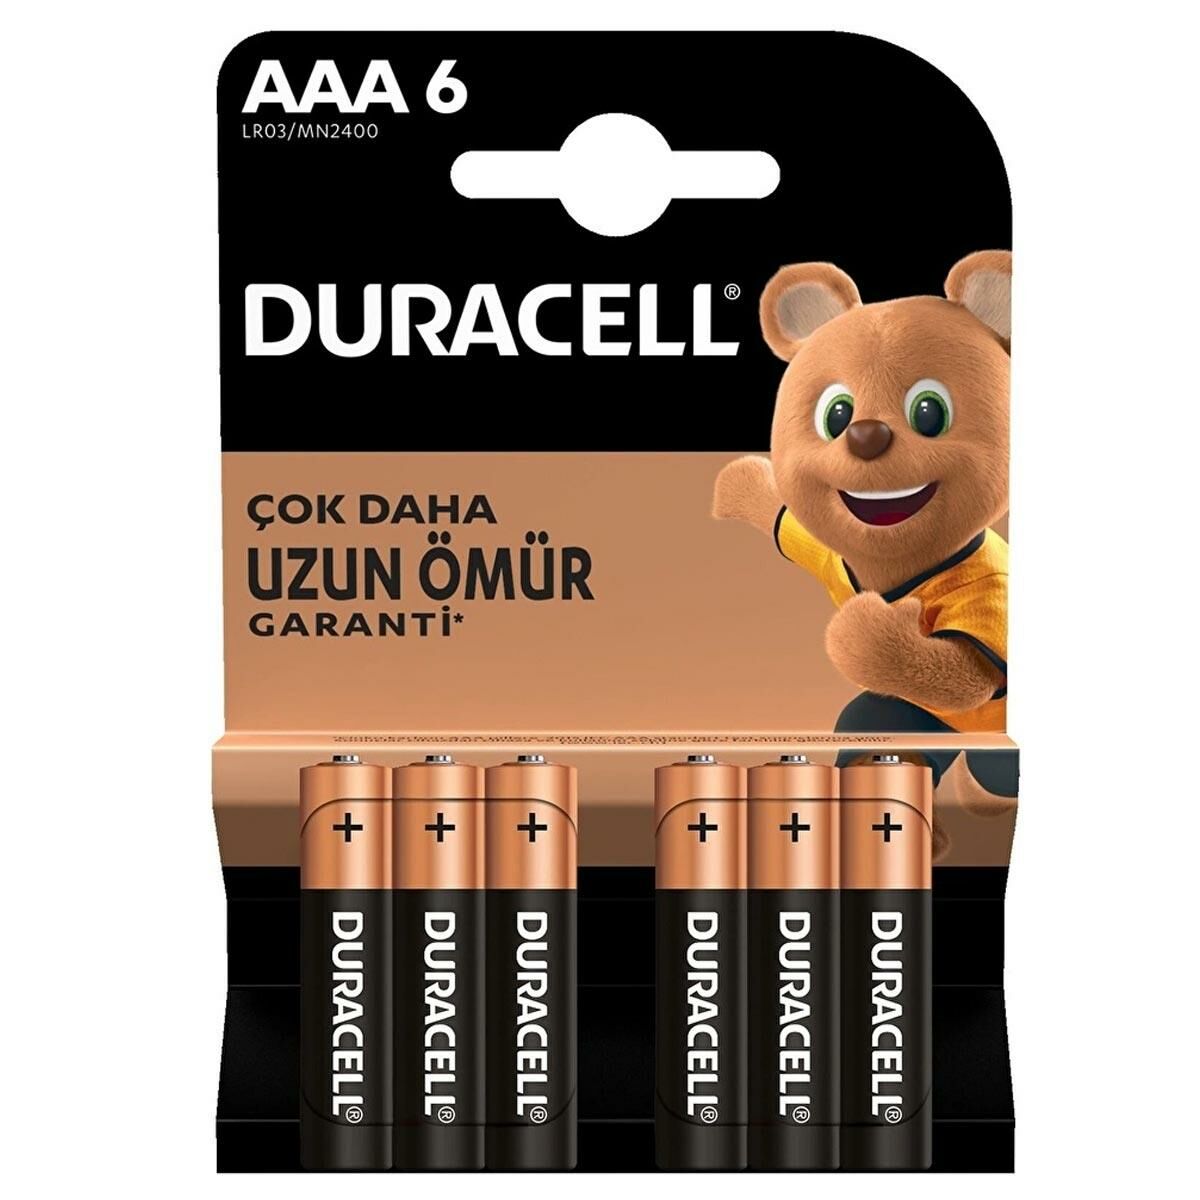 Duracell AAA Alkalin İnce Kalem Pil 6'lı Paket